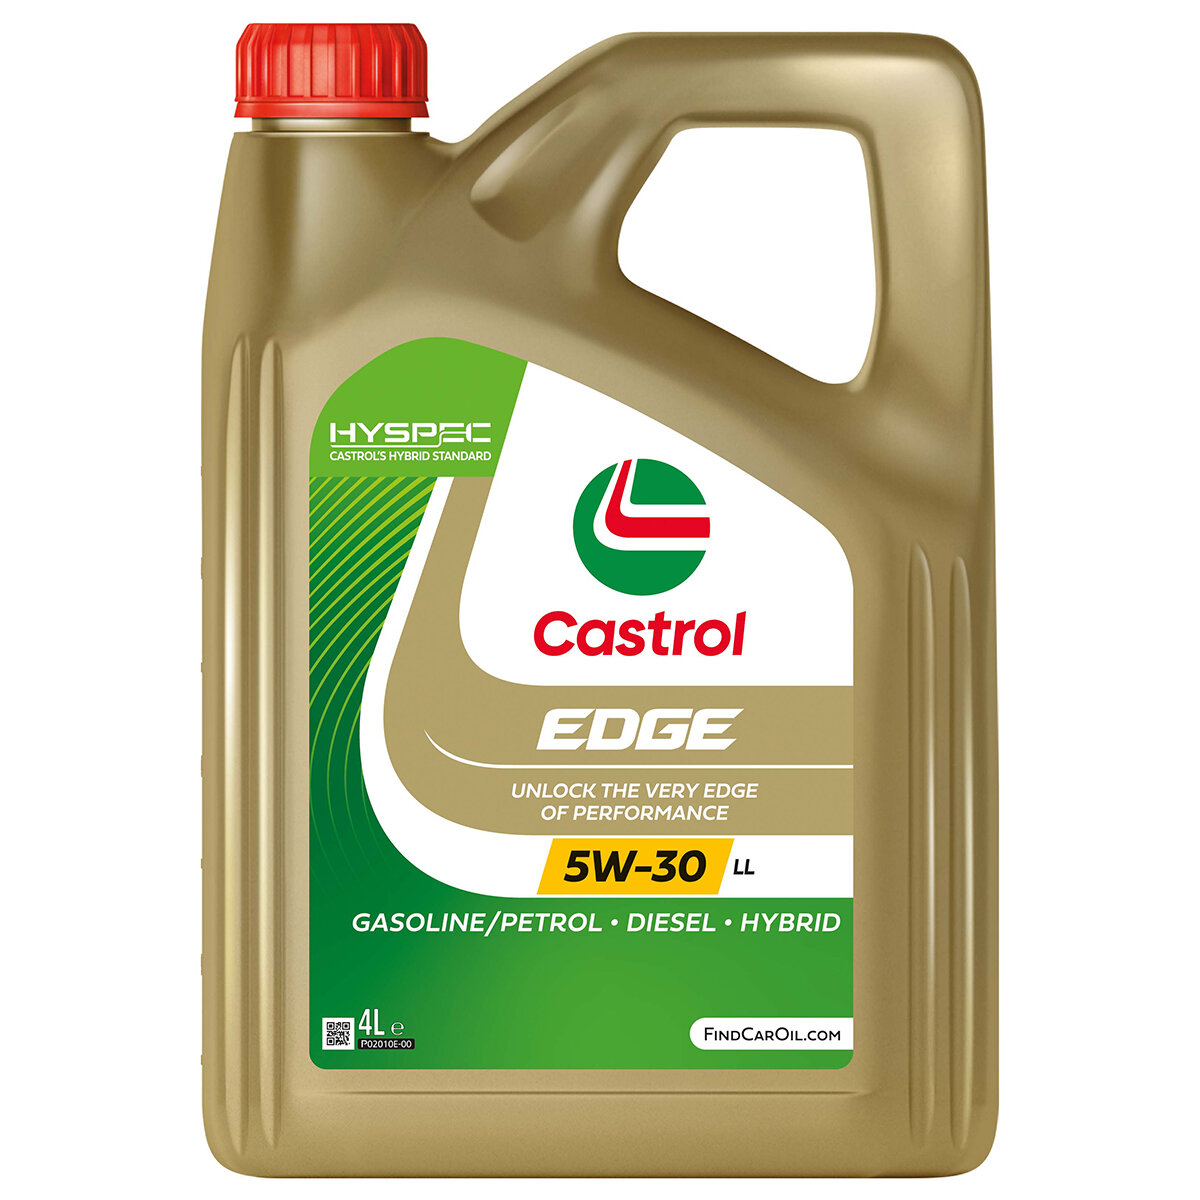 Castrol Edge Oil New Packaging 4L